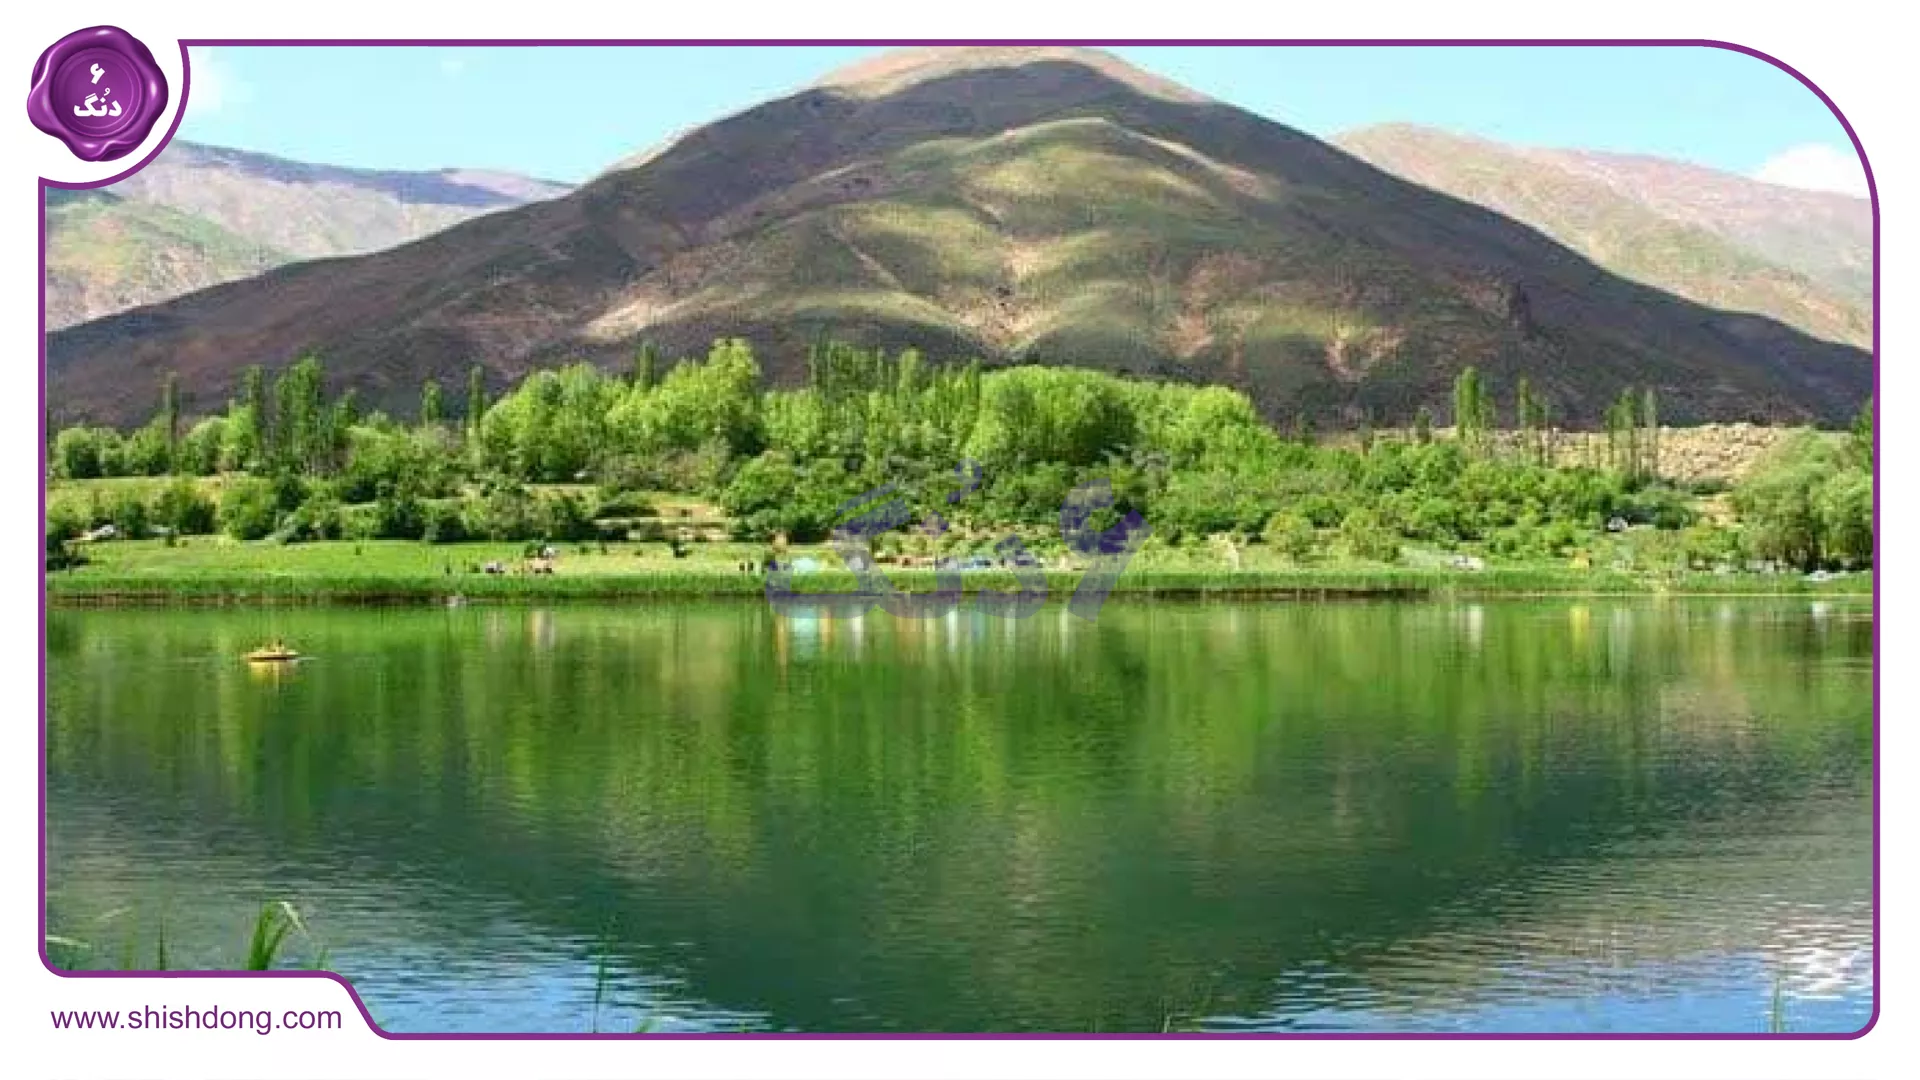 دریاچه طبیعی محله مهرشهر